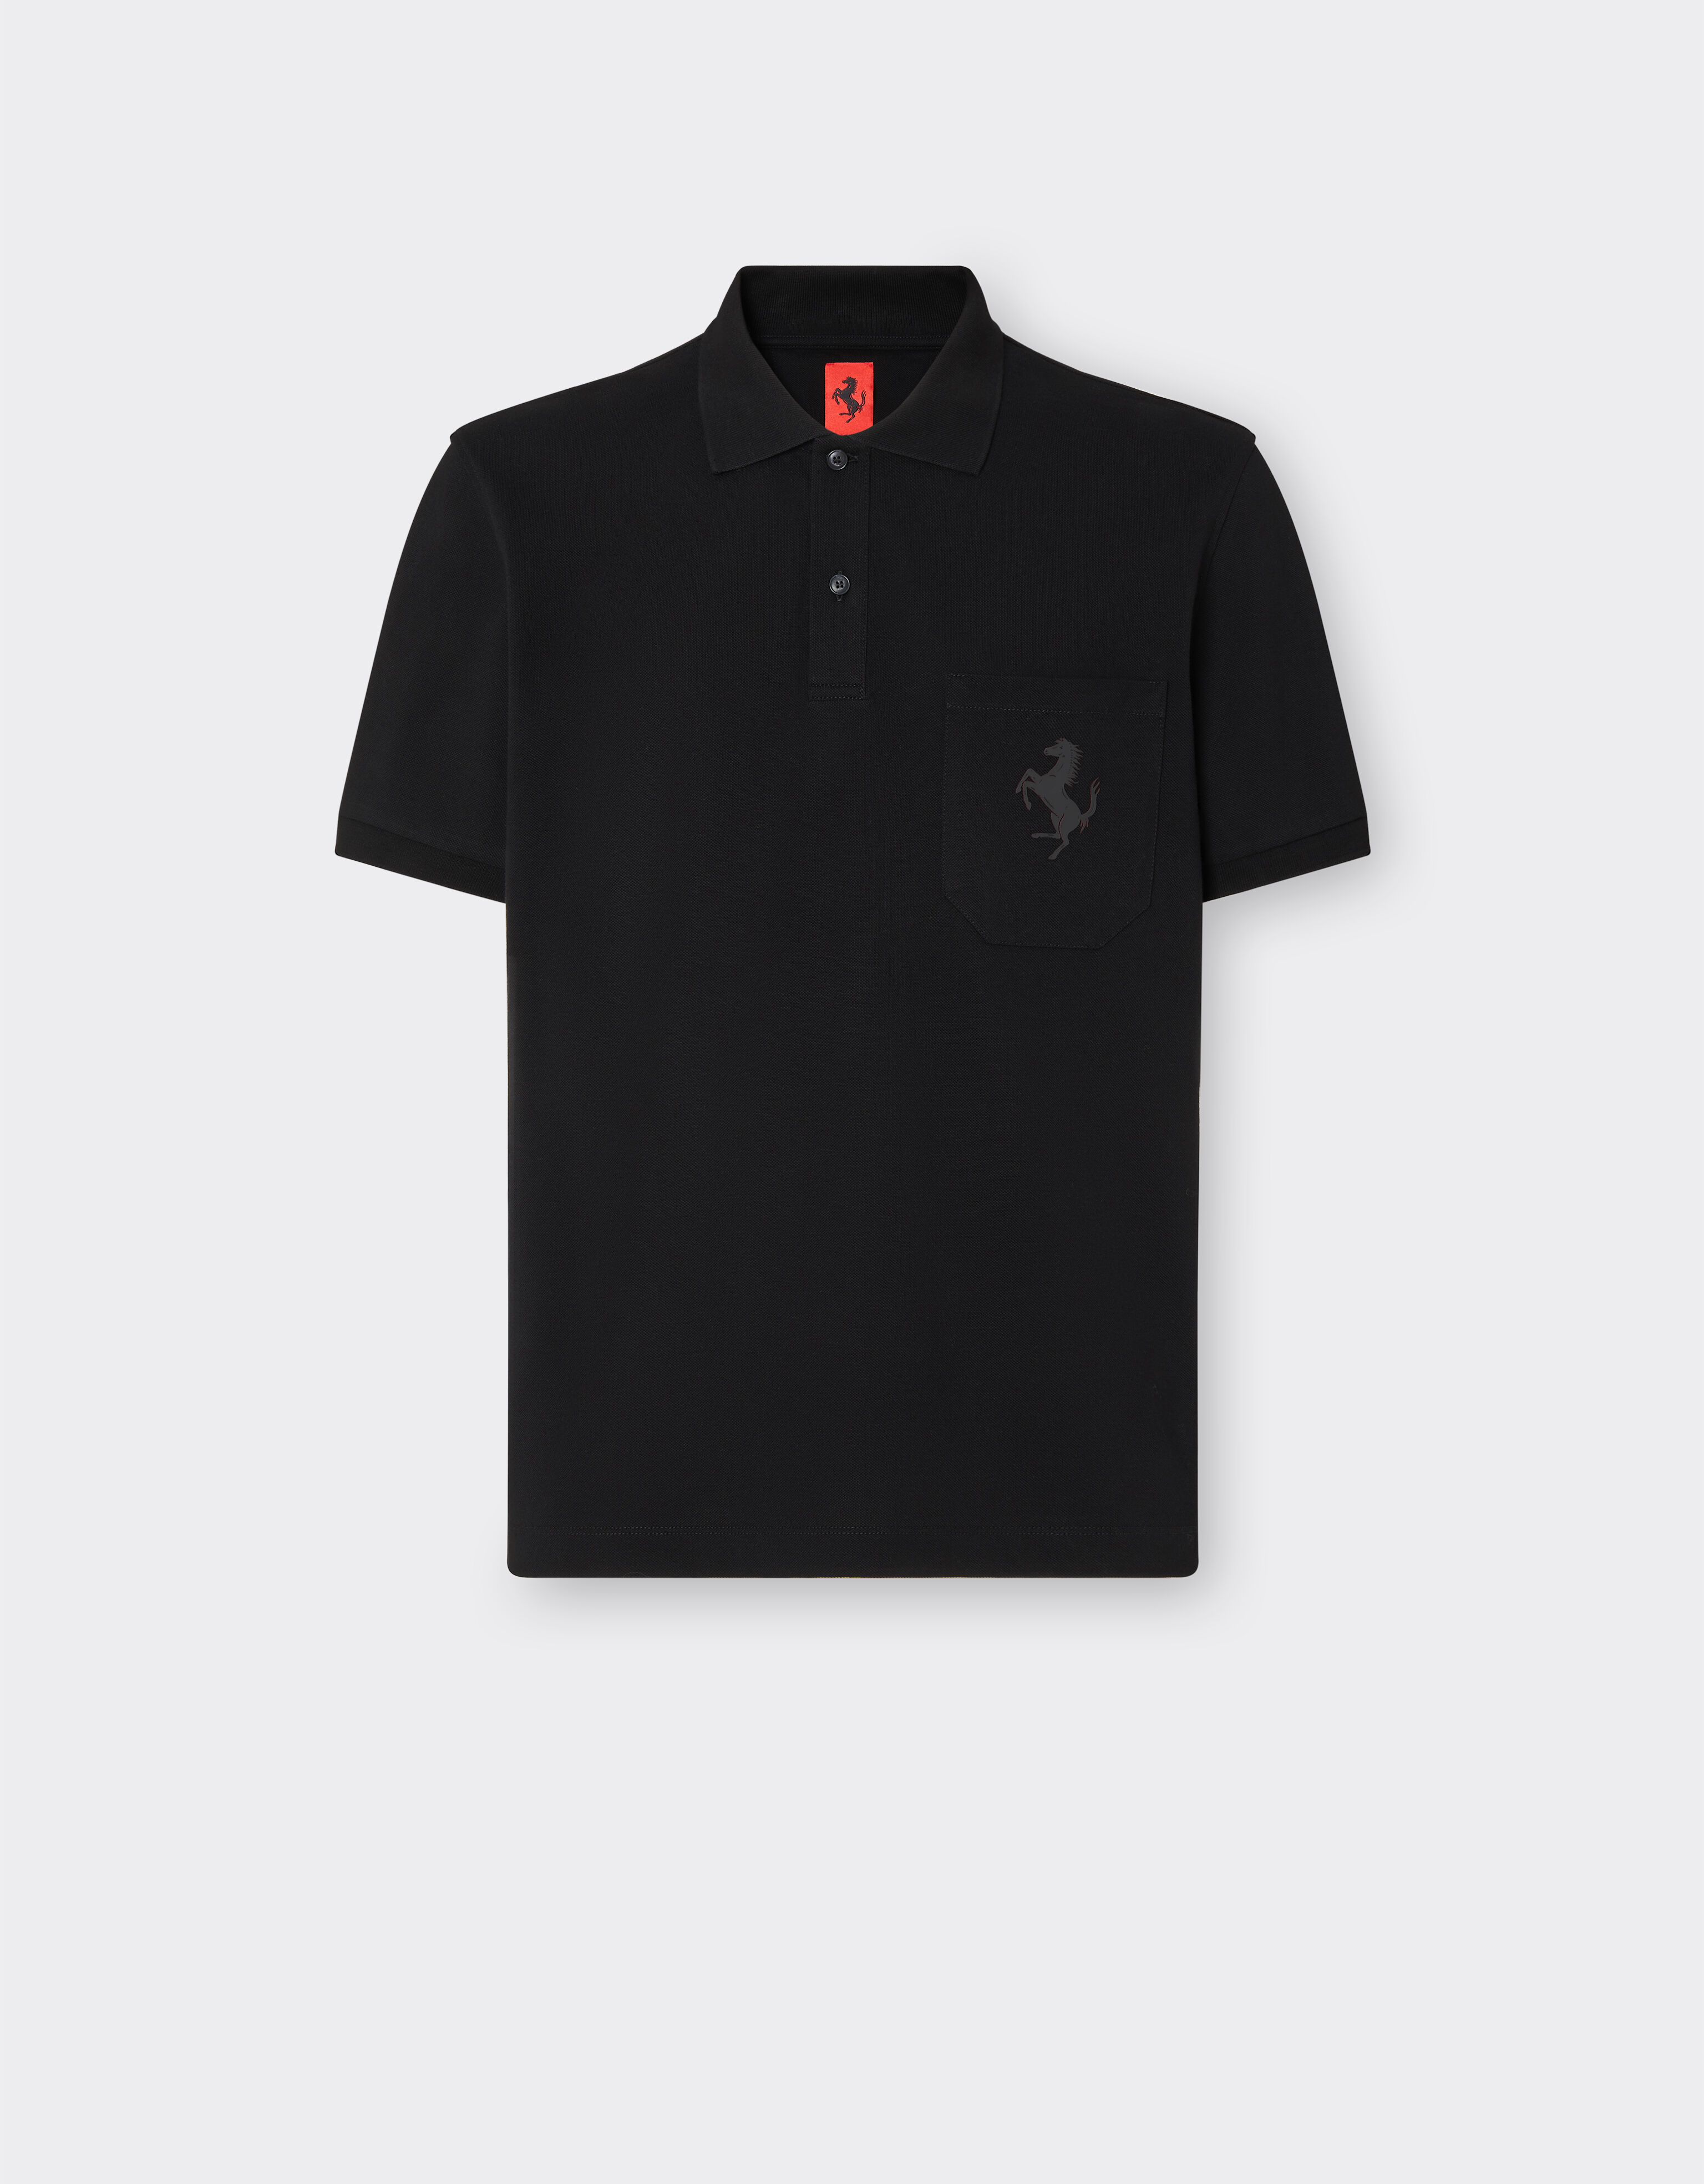 Ferrari Piqué cotton polo shirt with Prancing Horse detail Black 48515f